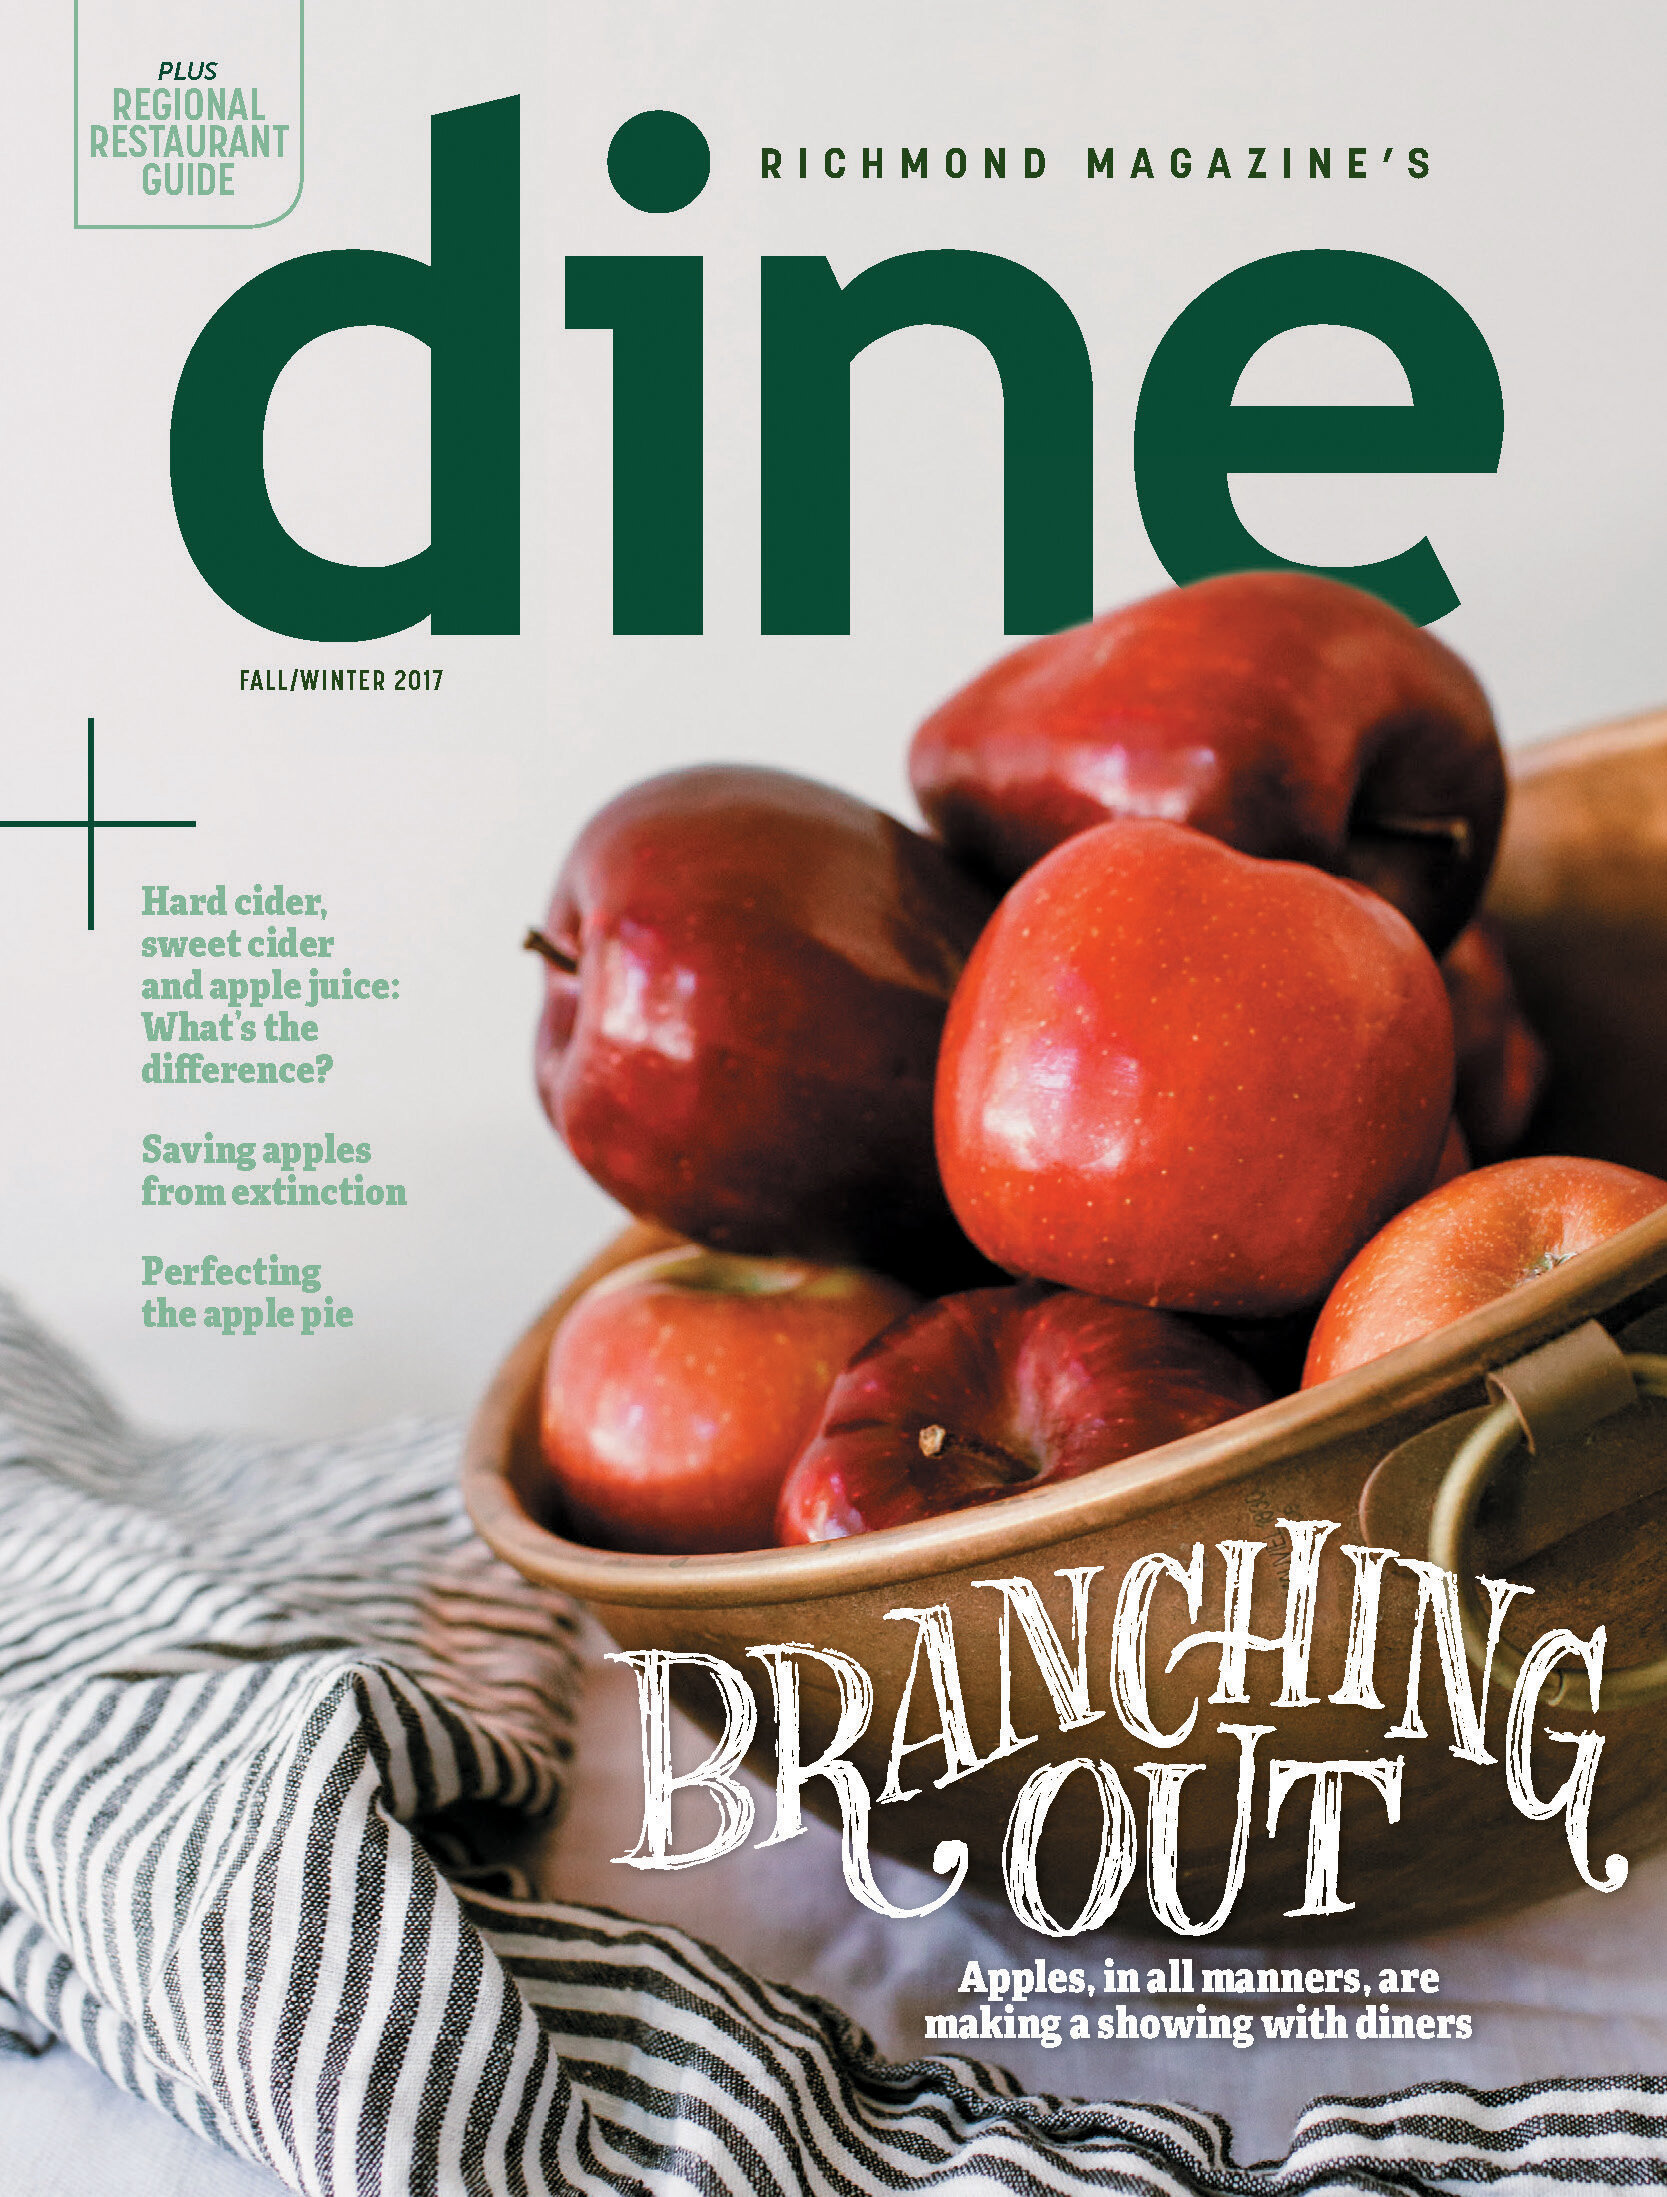 Dine-apples-editorial-design-1.jpg